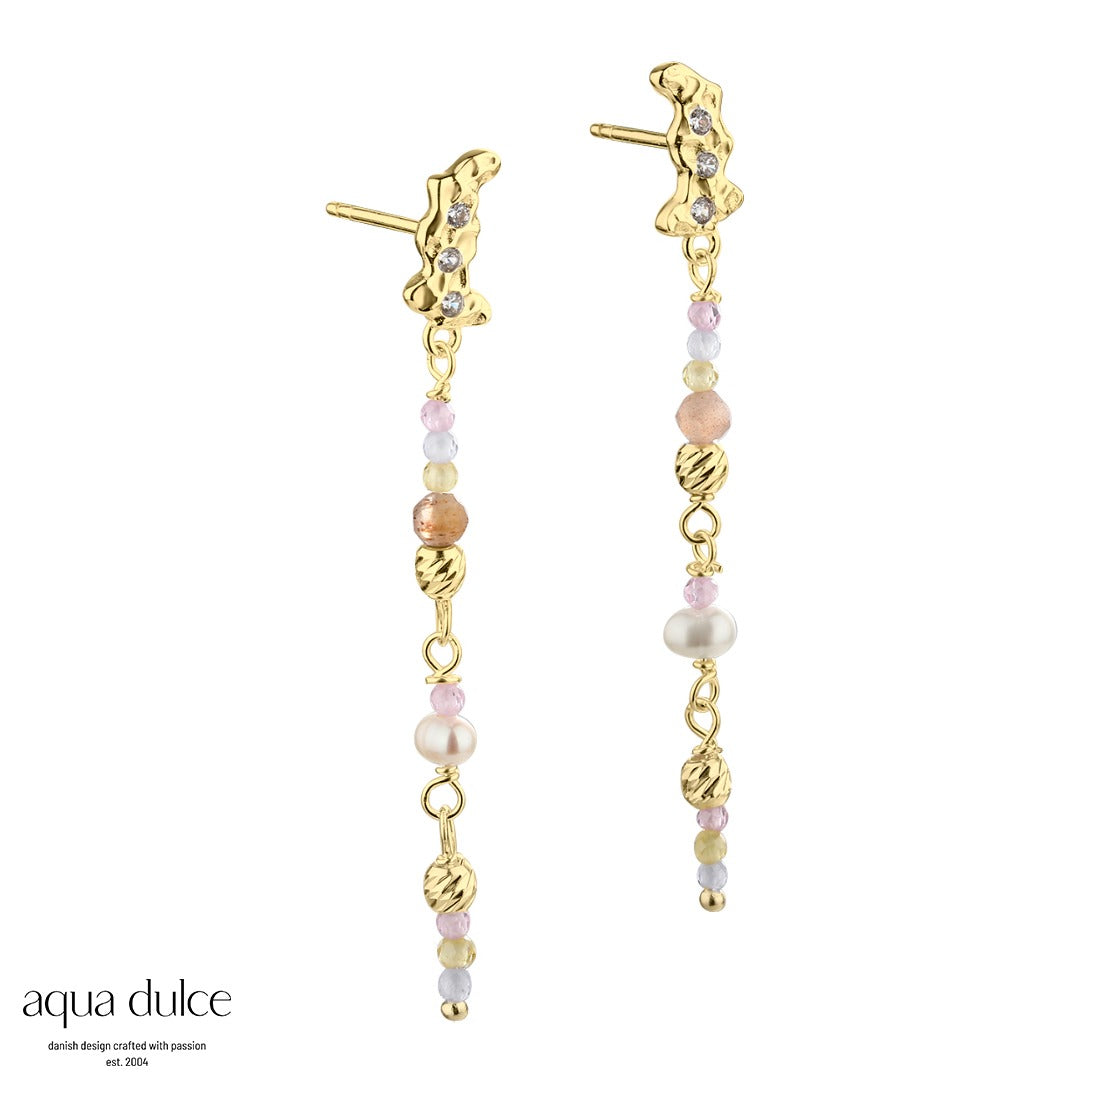 Aqua Dulce - Pretty Pastel Mix øreringe med perler, halvædelsten og cz i forgyldt sølv